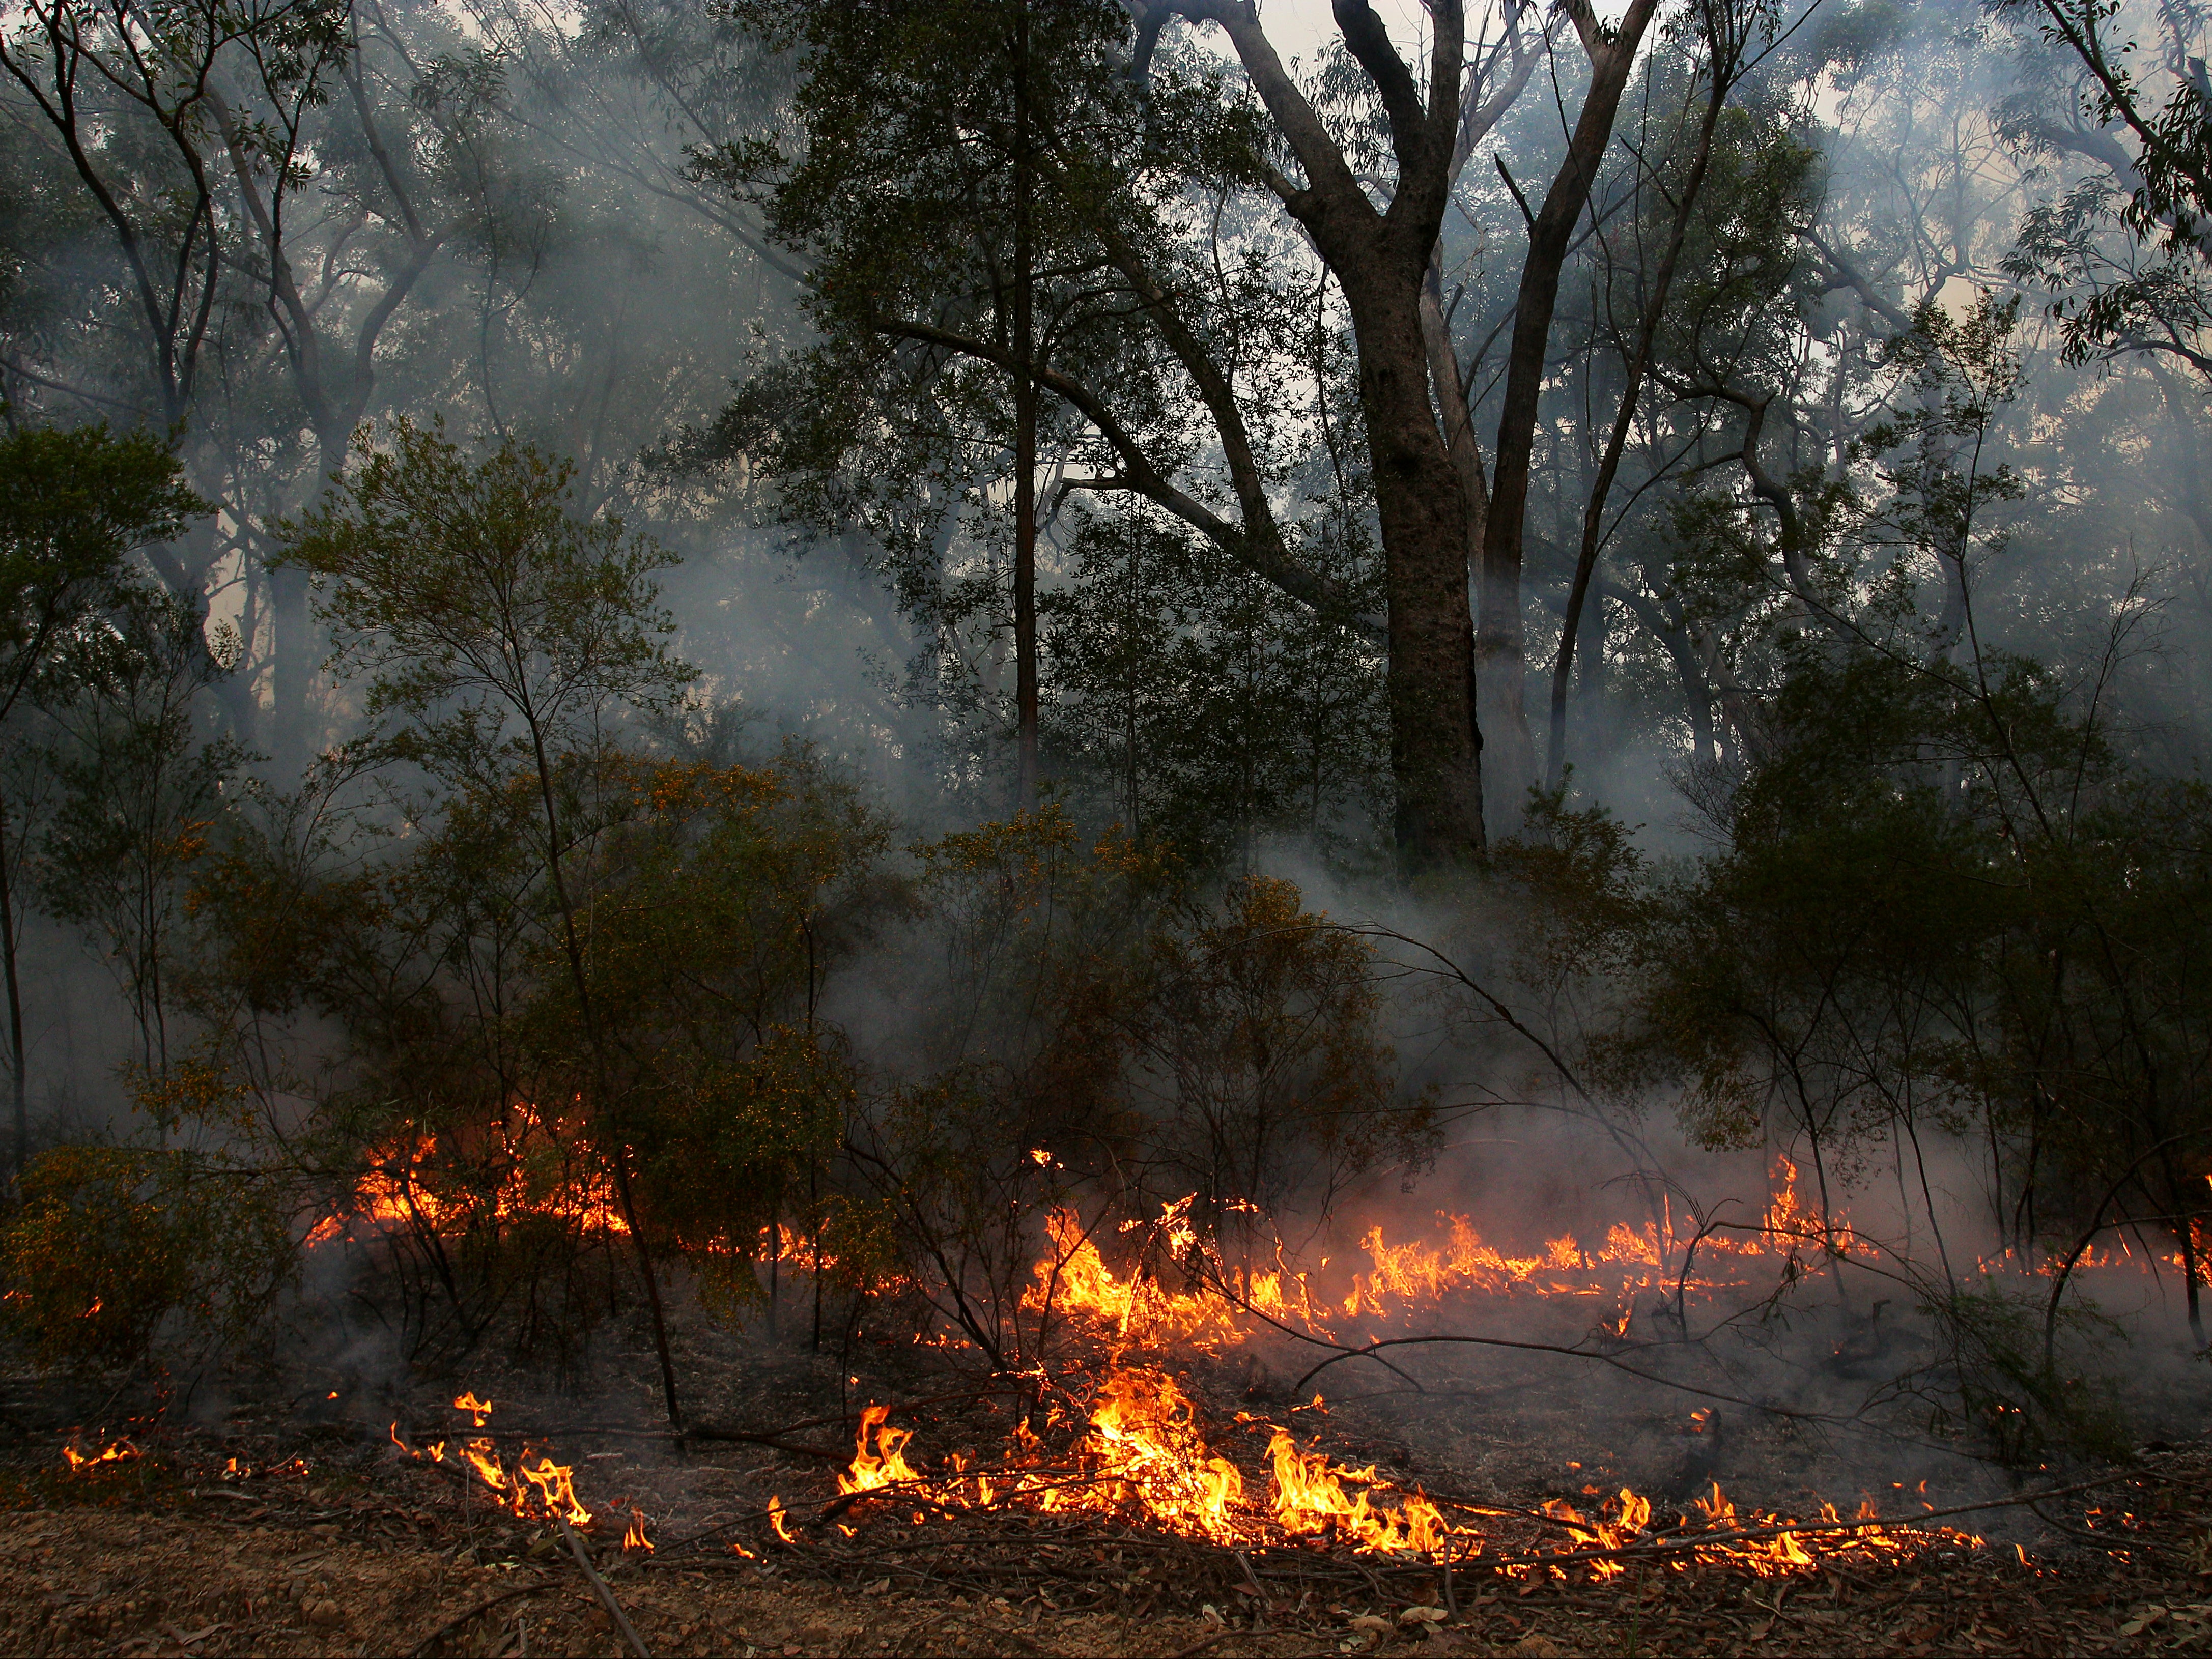 The bush fires killed or displaced around three billion animals